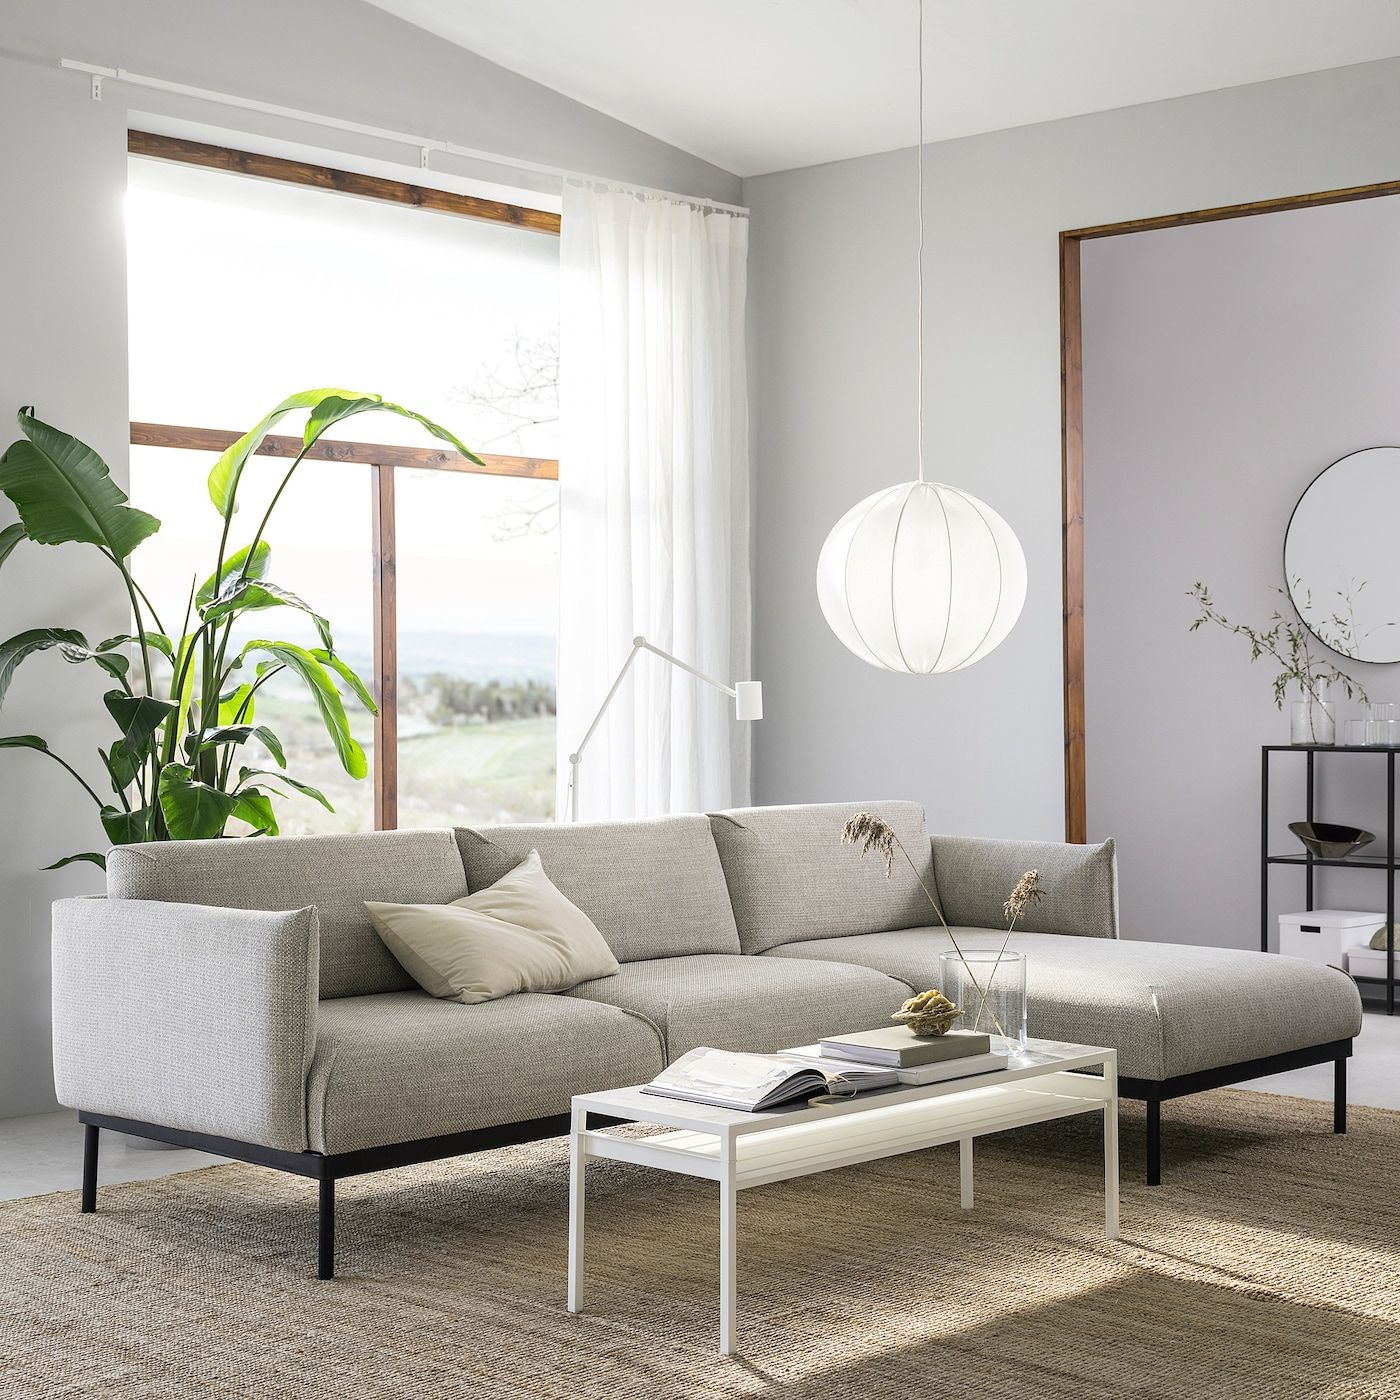 Äpplaryd 3 Seat Sofa With Chaise Longue, Lejde Light Grey – Ikea Inside Sofas In Light Grey (View 13 of 15)